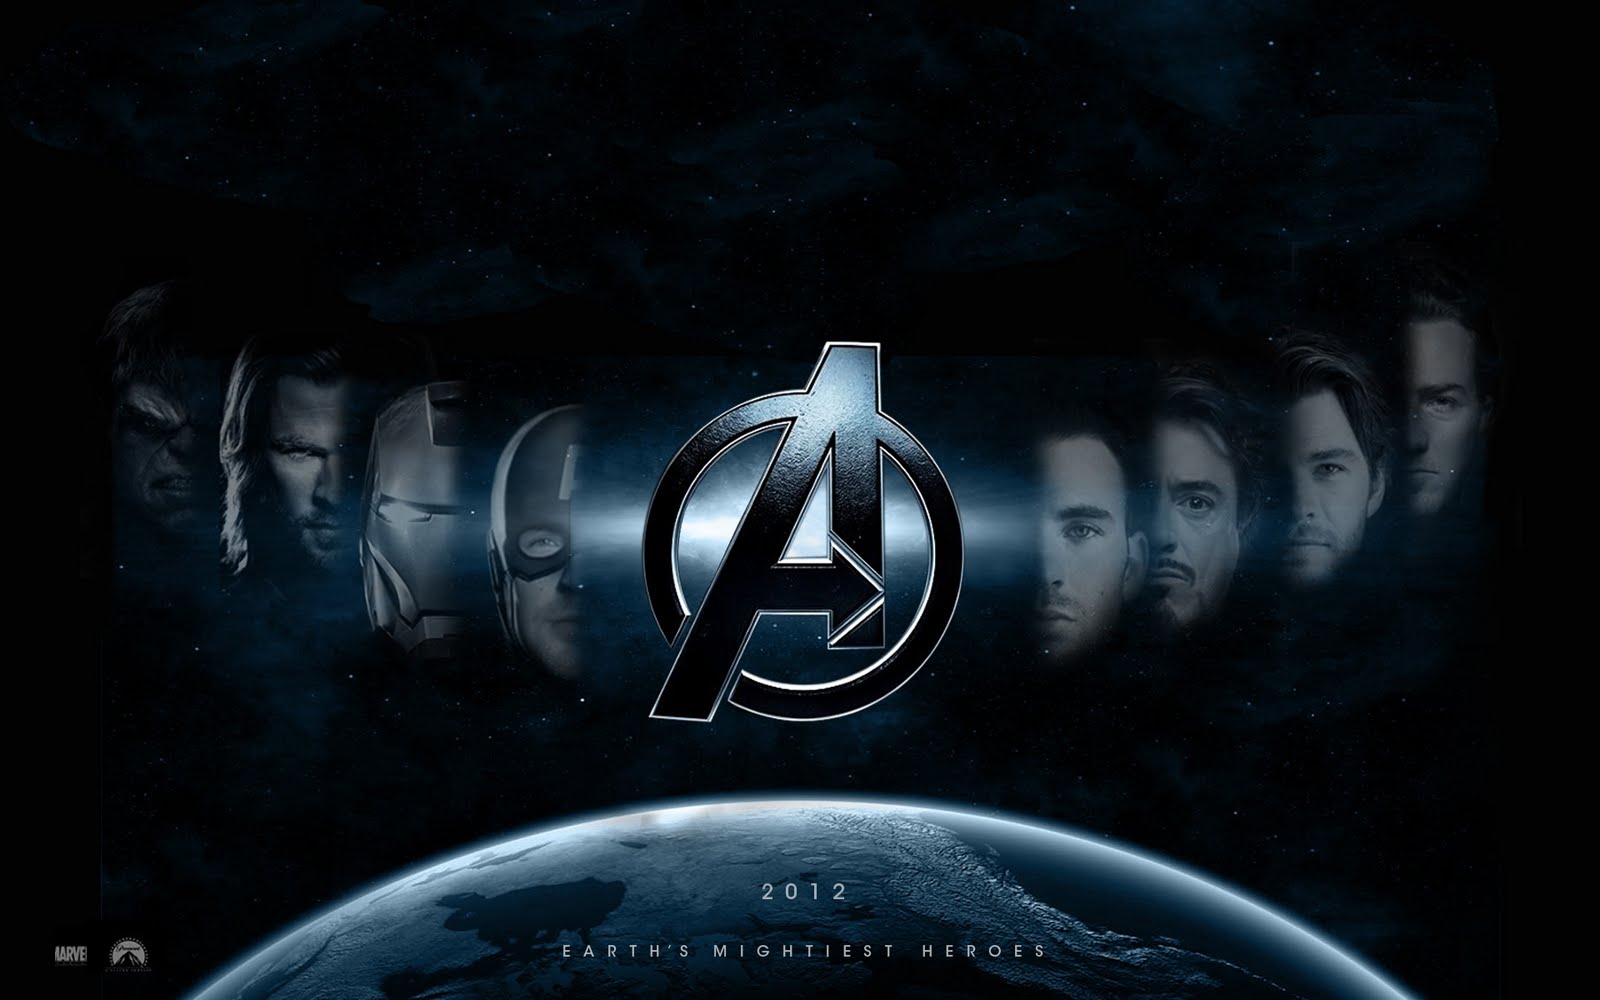 https://blogger.googleusercontent.com/img/b/R29vZ2xl/AVvXsEgl8tdP6UtFaT36aMcWCgMM7sJqomym0itUv5HfCAzrOxbZyKMp702oV9V33El6eljU1UWRFvMJxvVsyx01JRavdU0SOeMMaBY6DIIYGO1YQ0eu1KFVy1fEs_Mj3pJa2U4XDYAwTFtibvds/s1600/The-Avengers-wallpaper.jpg